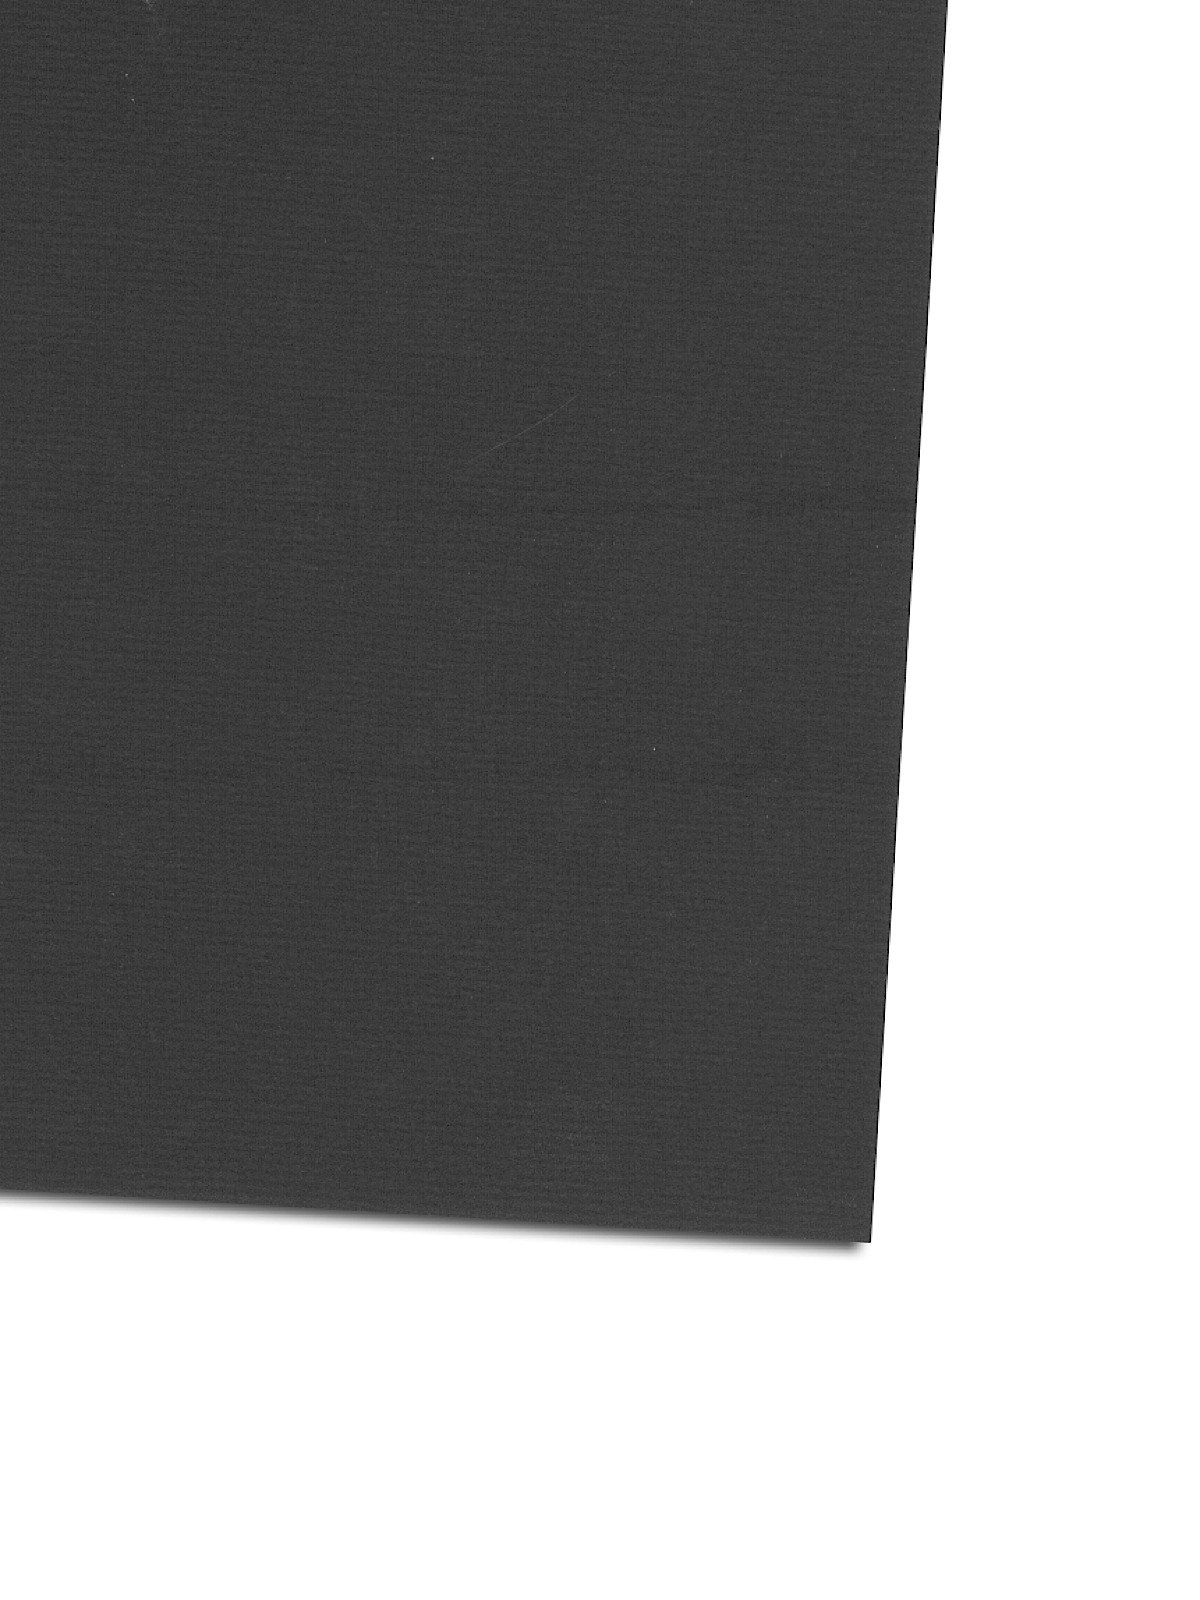 Strathmore 500 Series Charcoal Paper - 19 x 25, Black